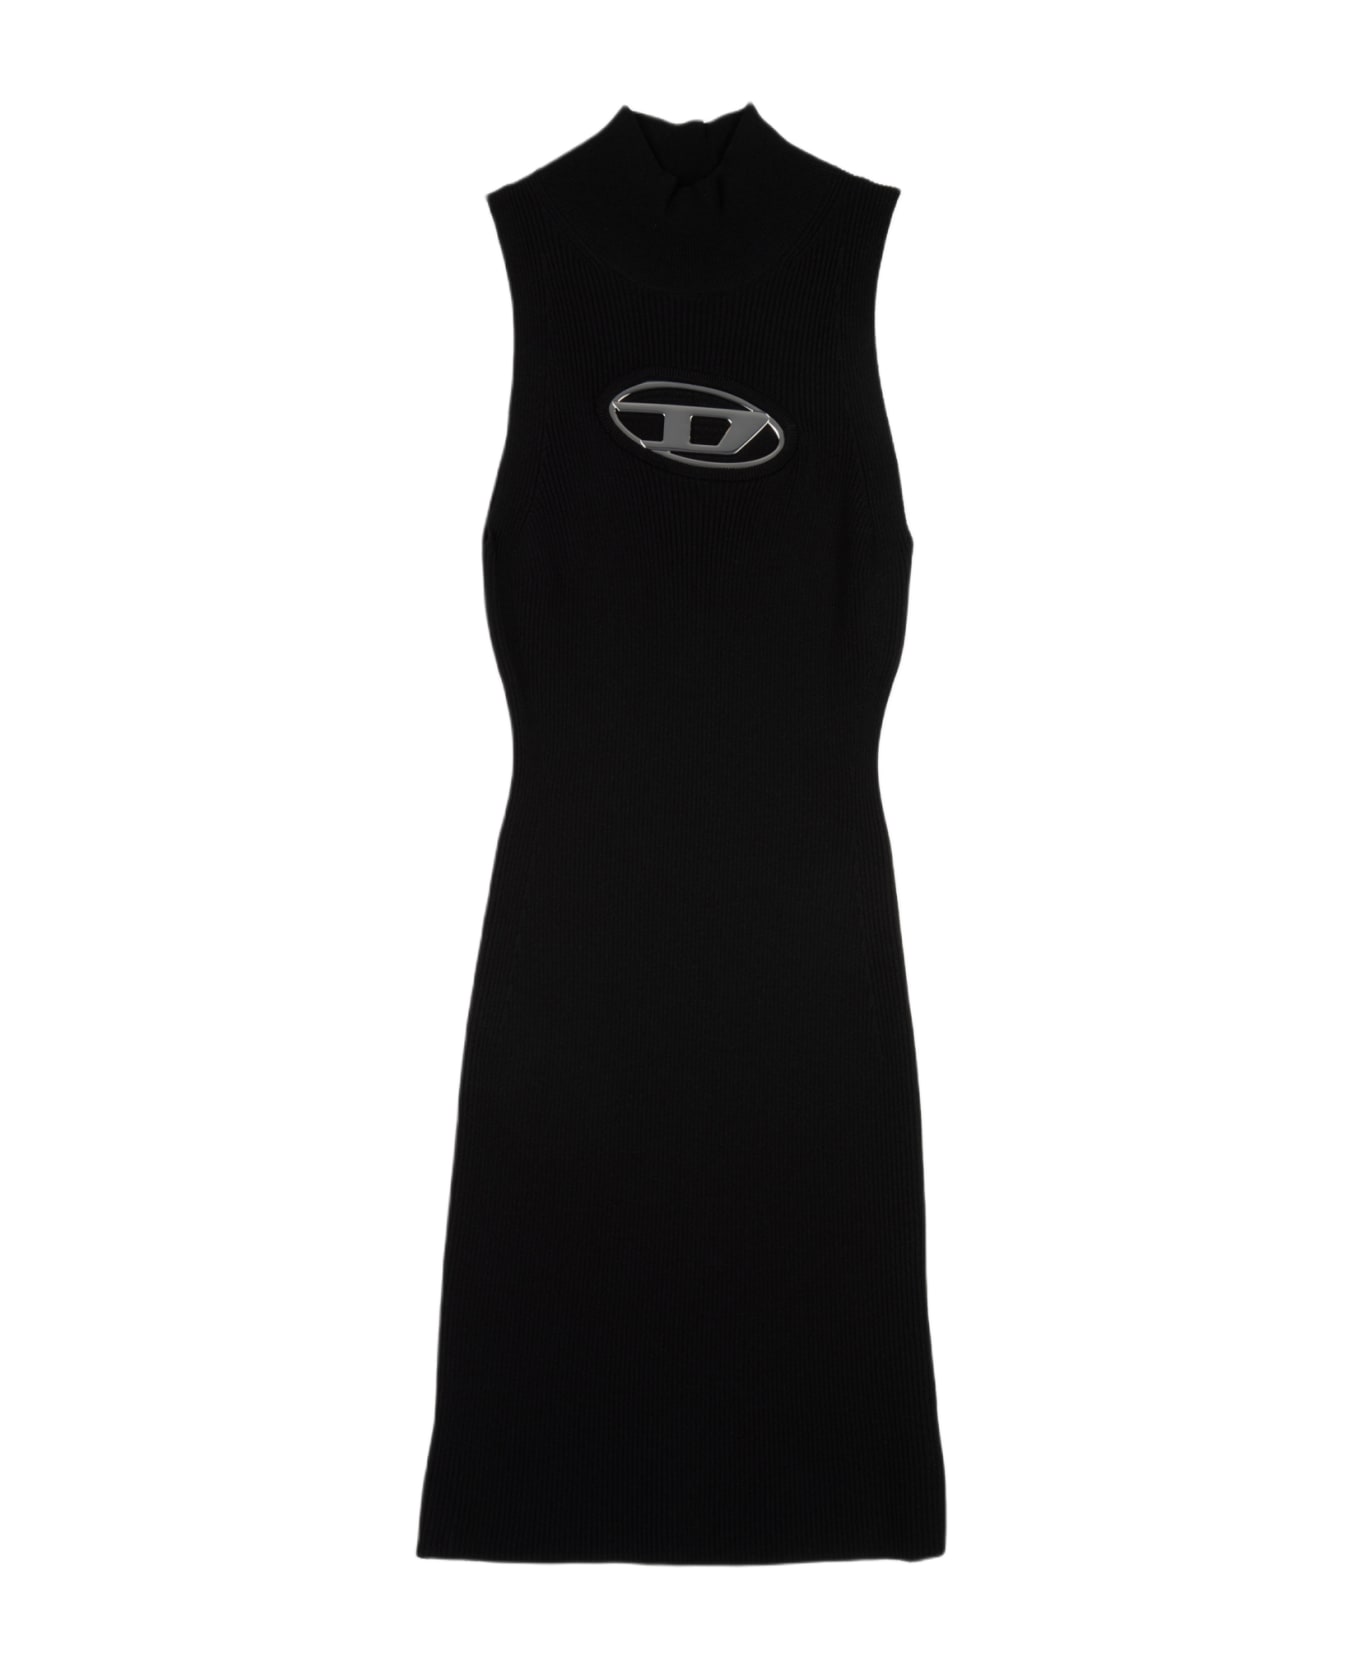 Diesel M-onerva Black rib-knitted turtleneck dress- M Onerva - Nero